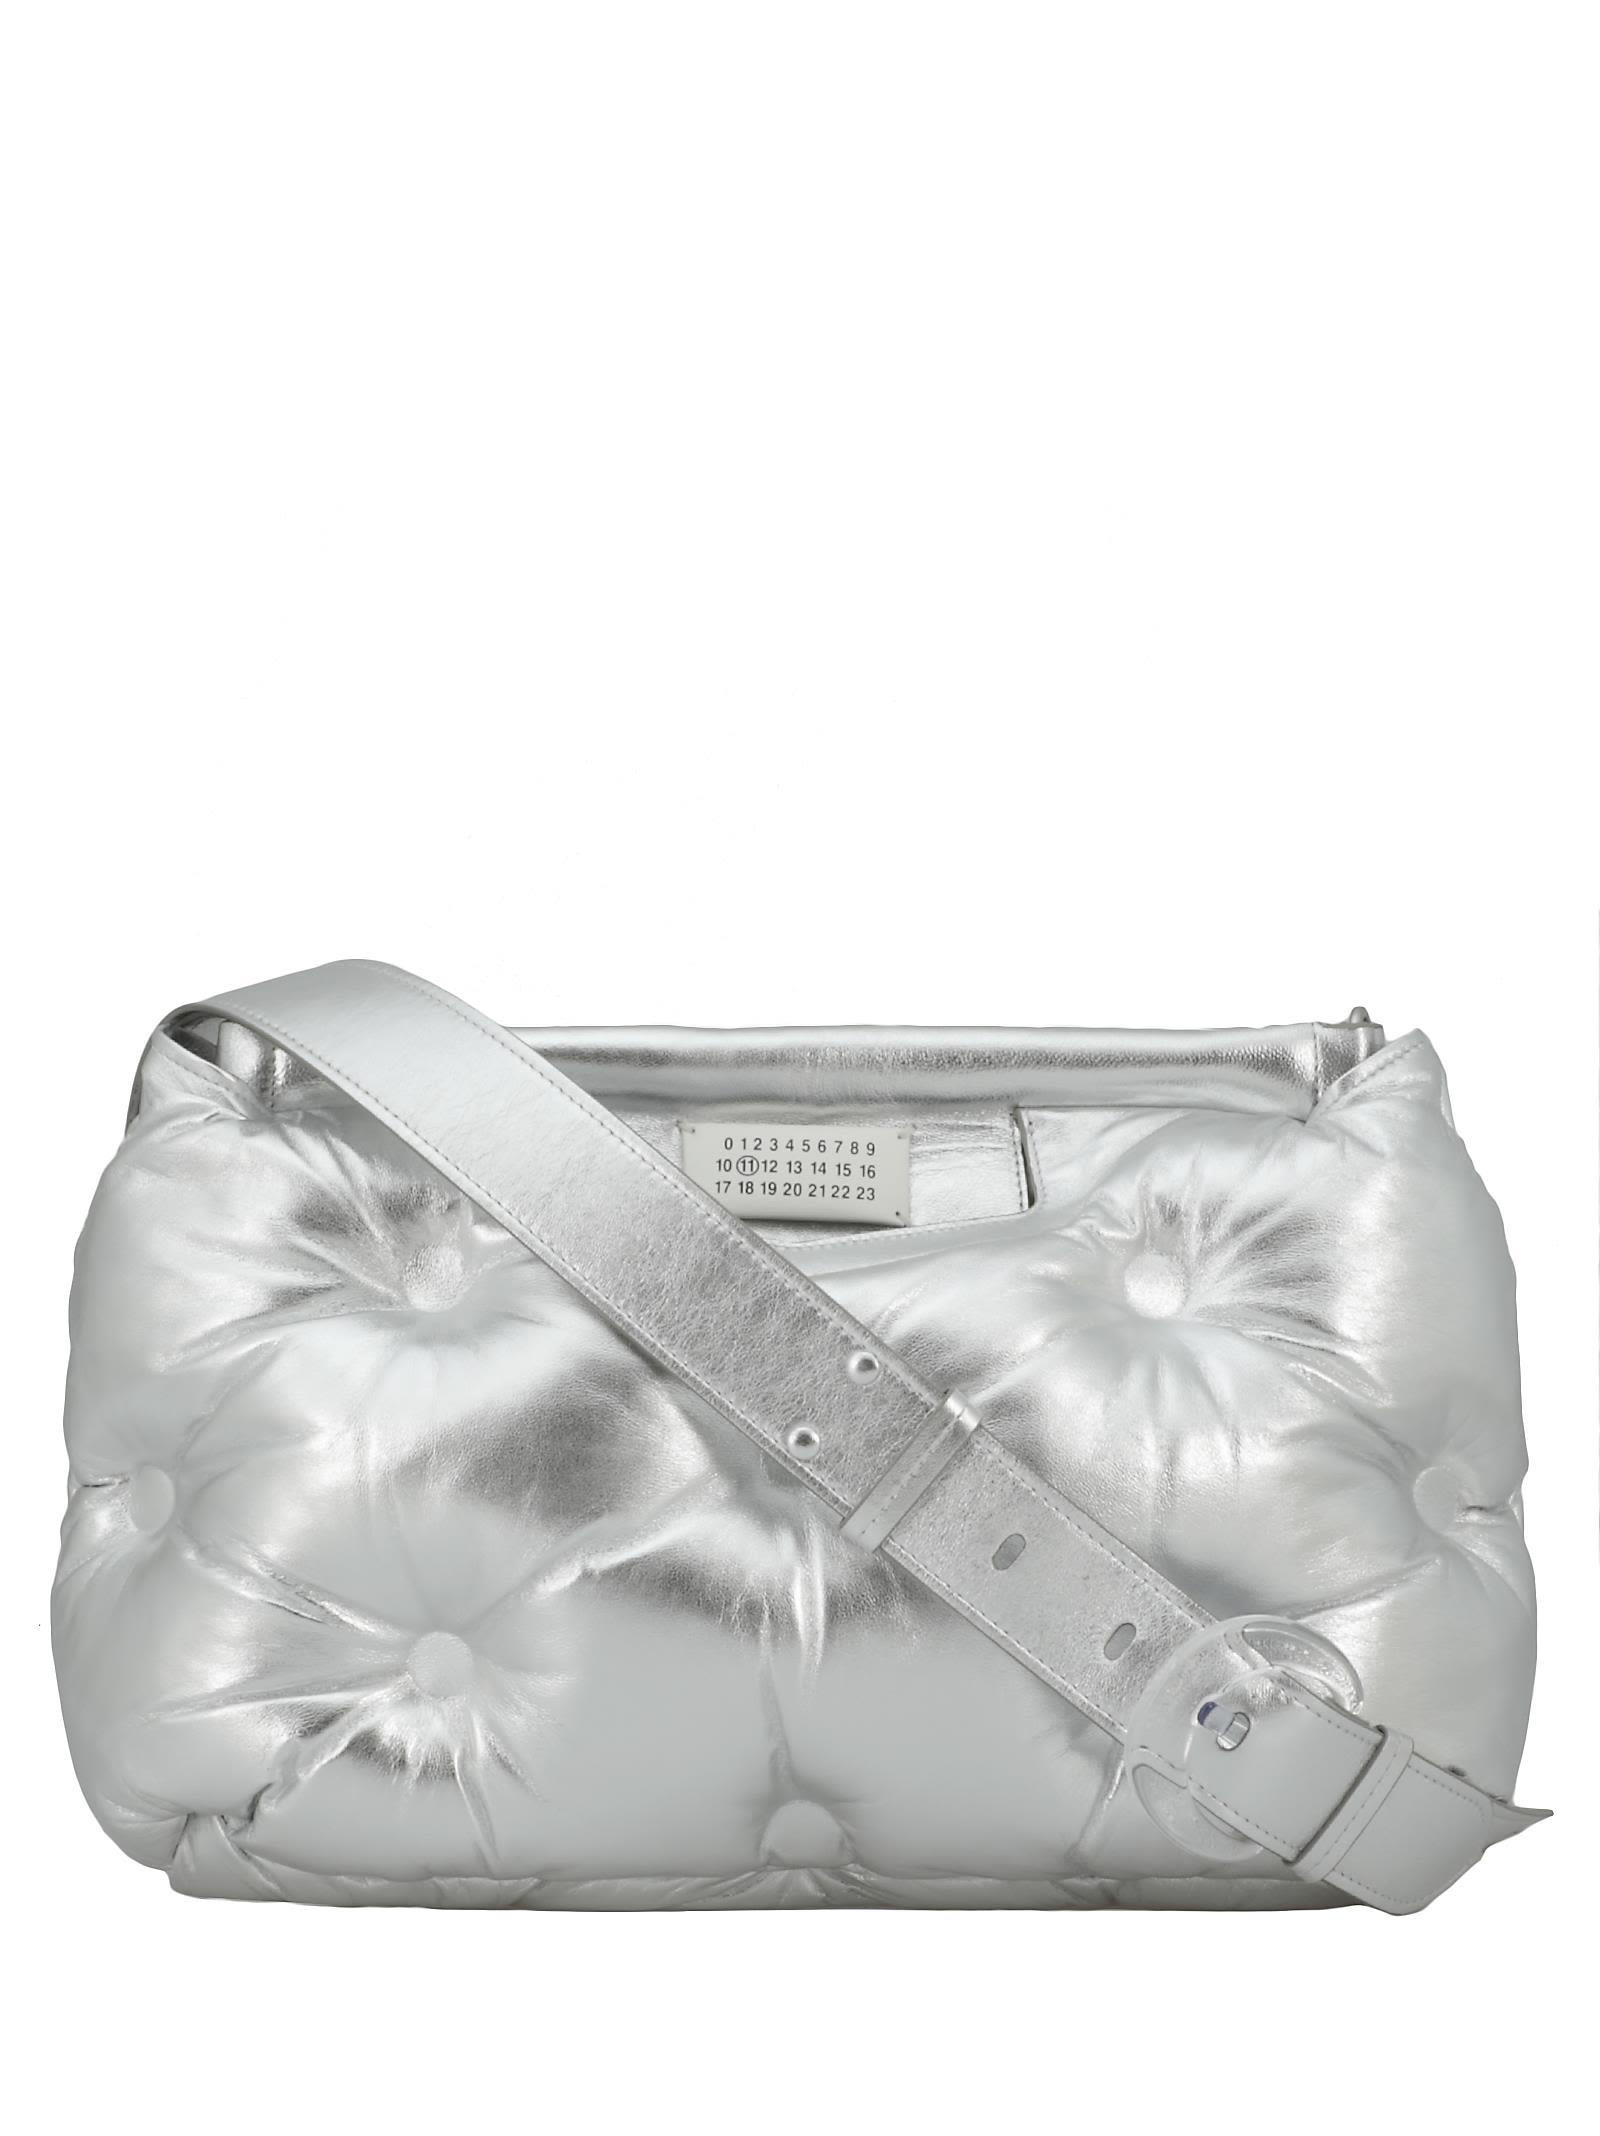 Maison Margiela Medium Glam Slam Bag In Silver | ModeSens